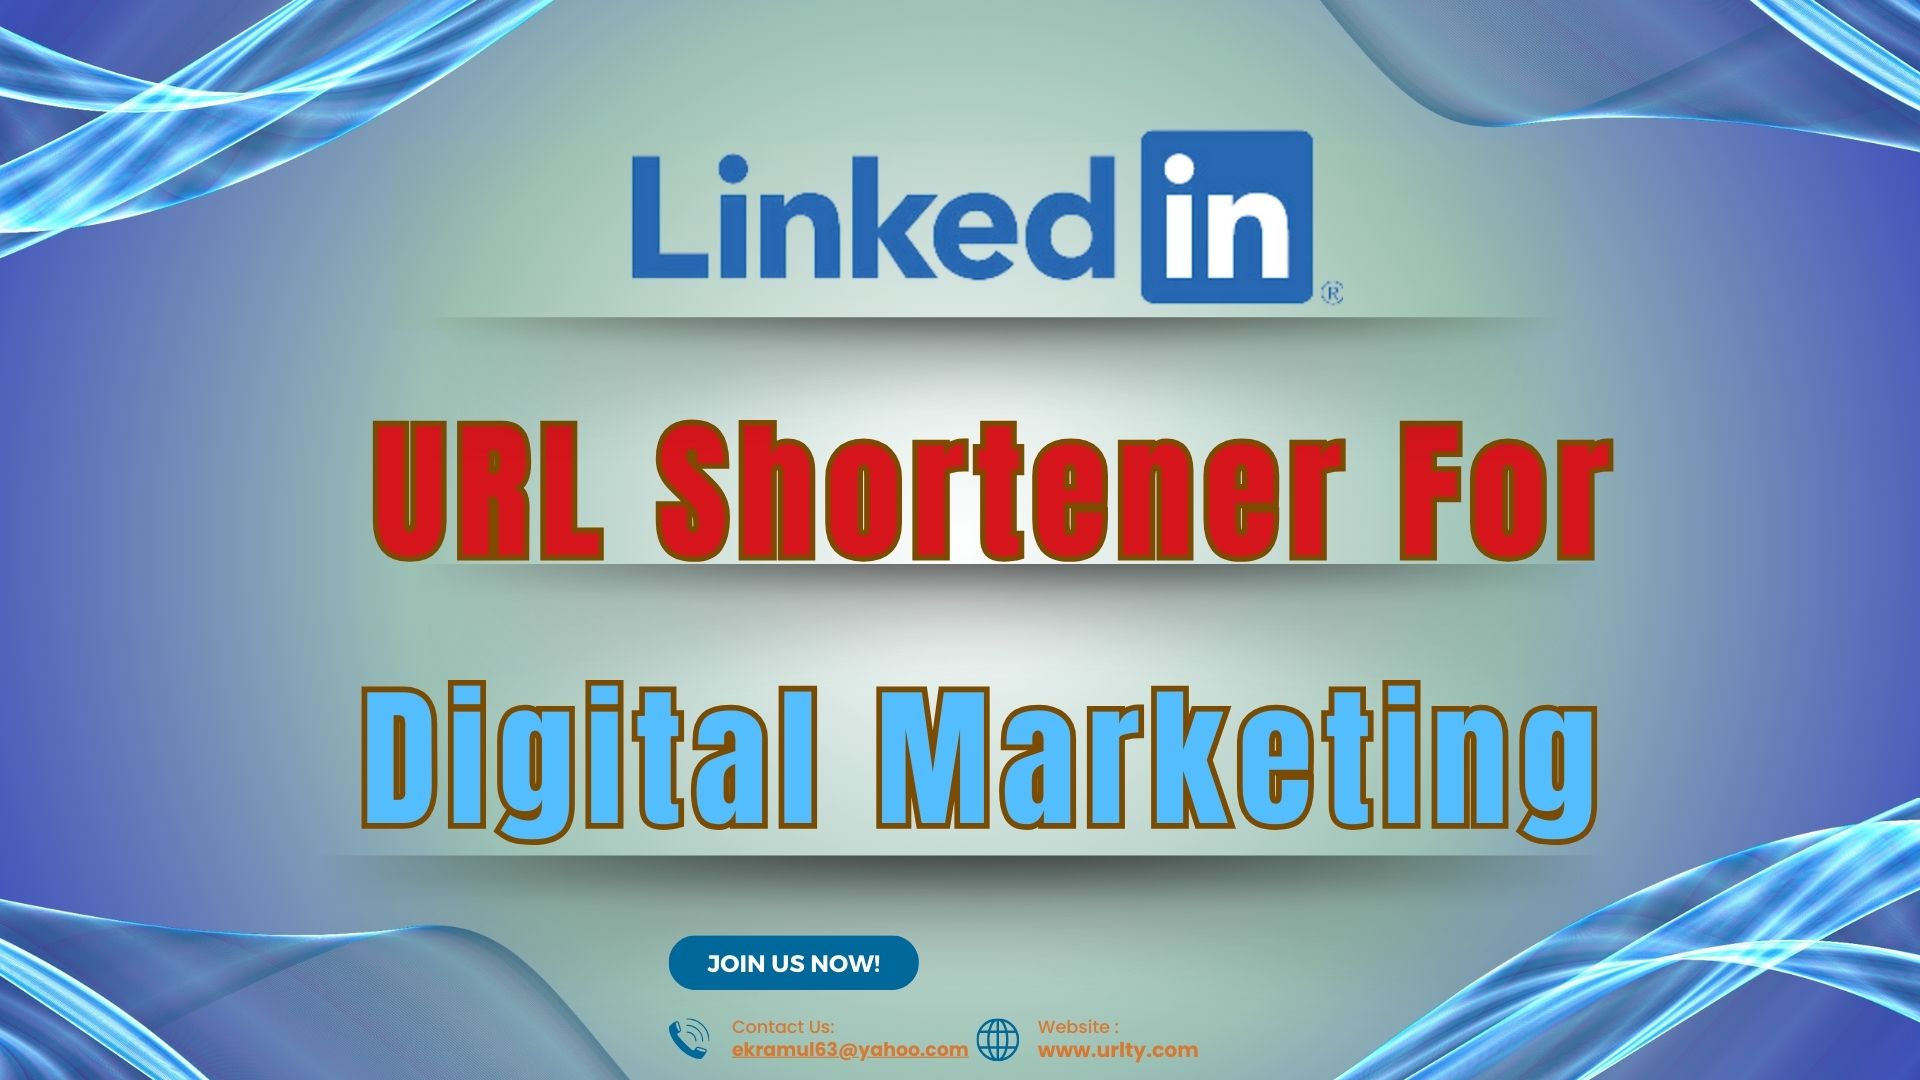 LinkedIn URL Shortener for Digital Marketing